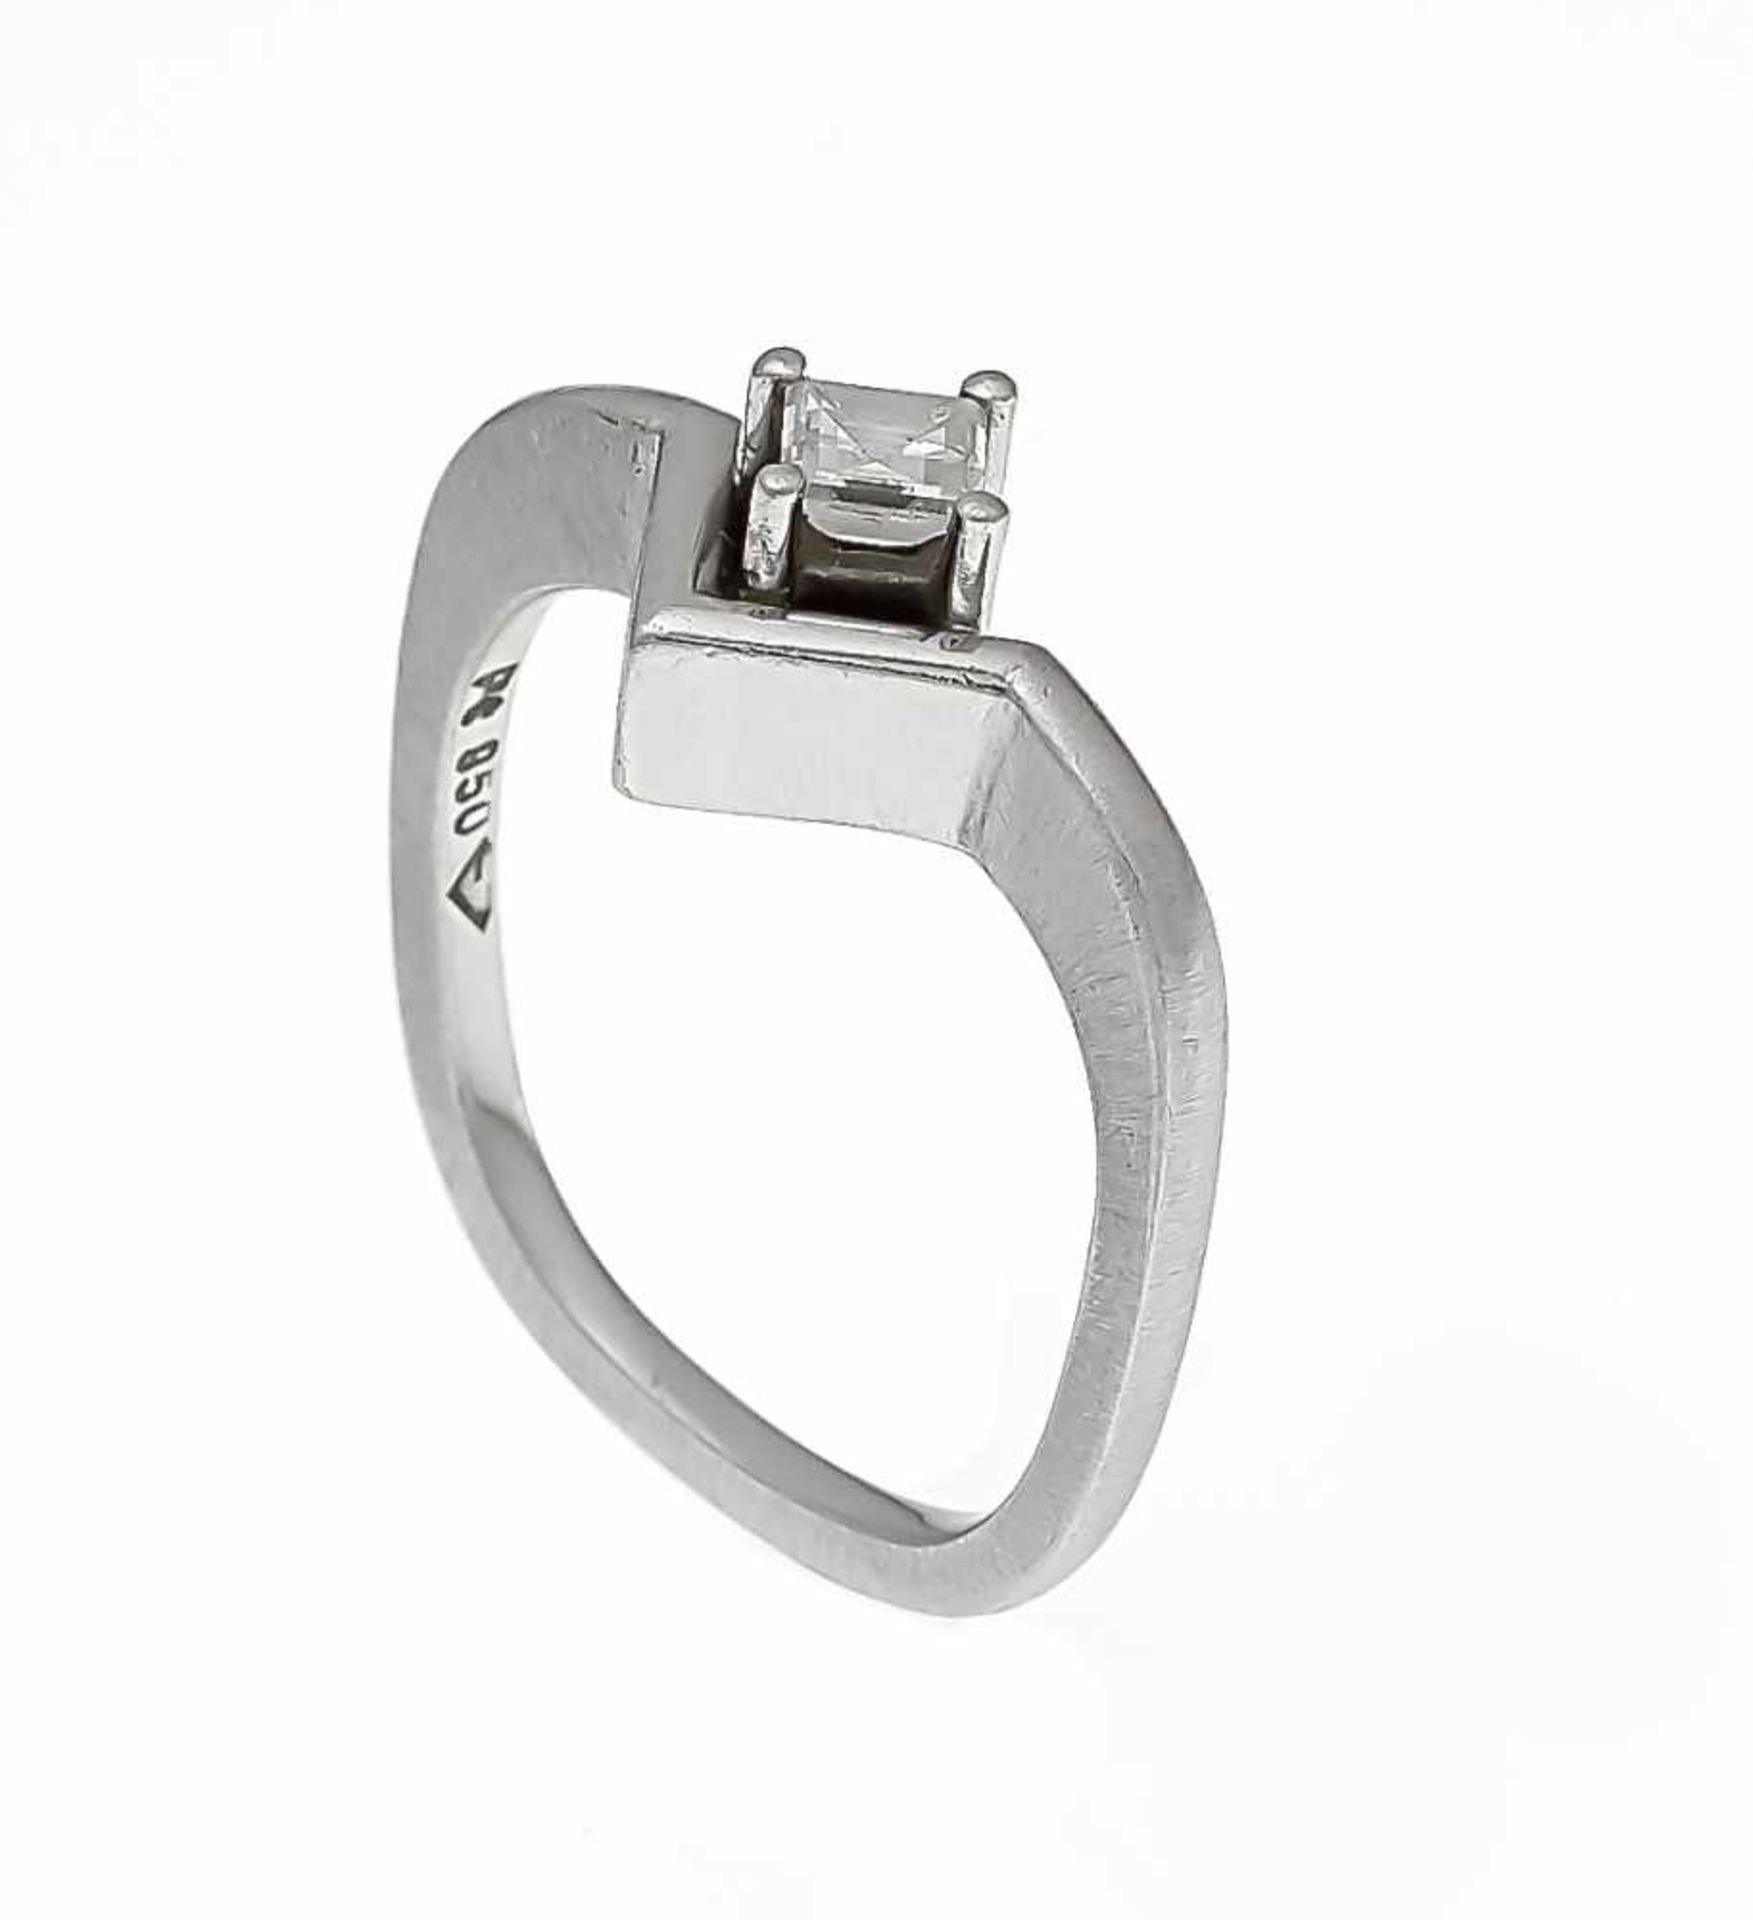 Solitaire ring platinum Pt 950/000 with a diamond Carré 0.28 ct l.get.W-W / VS, RG 53, 6.1<